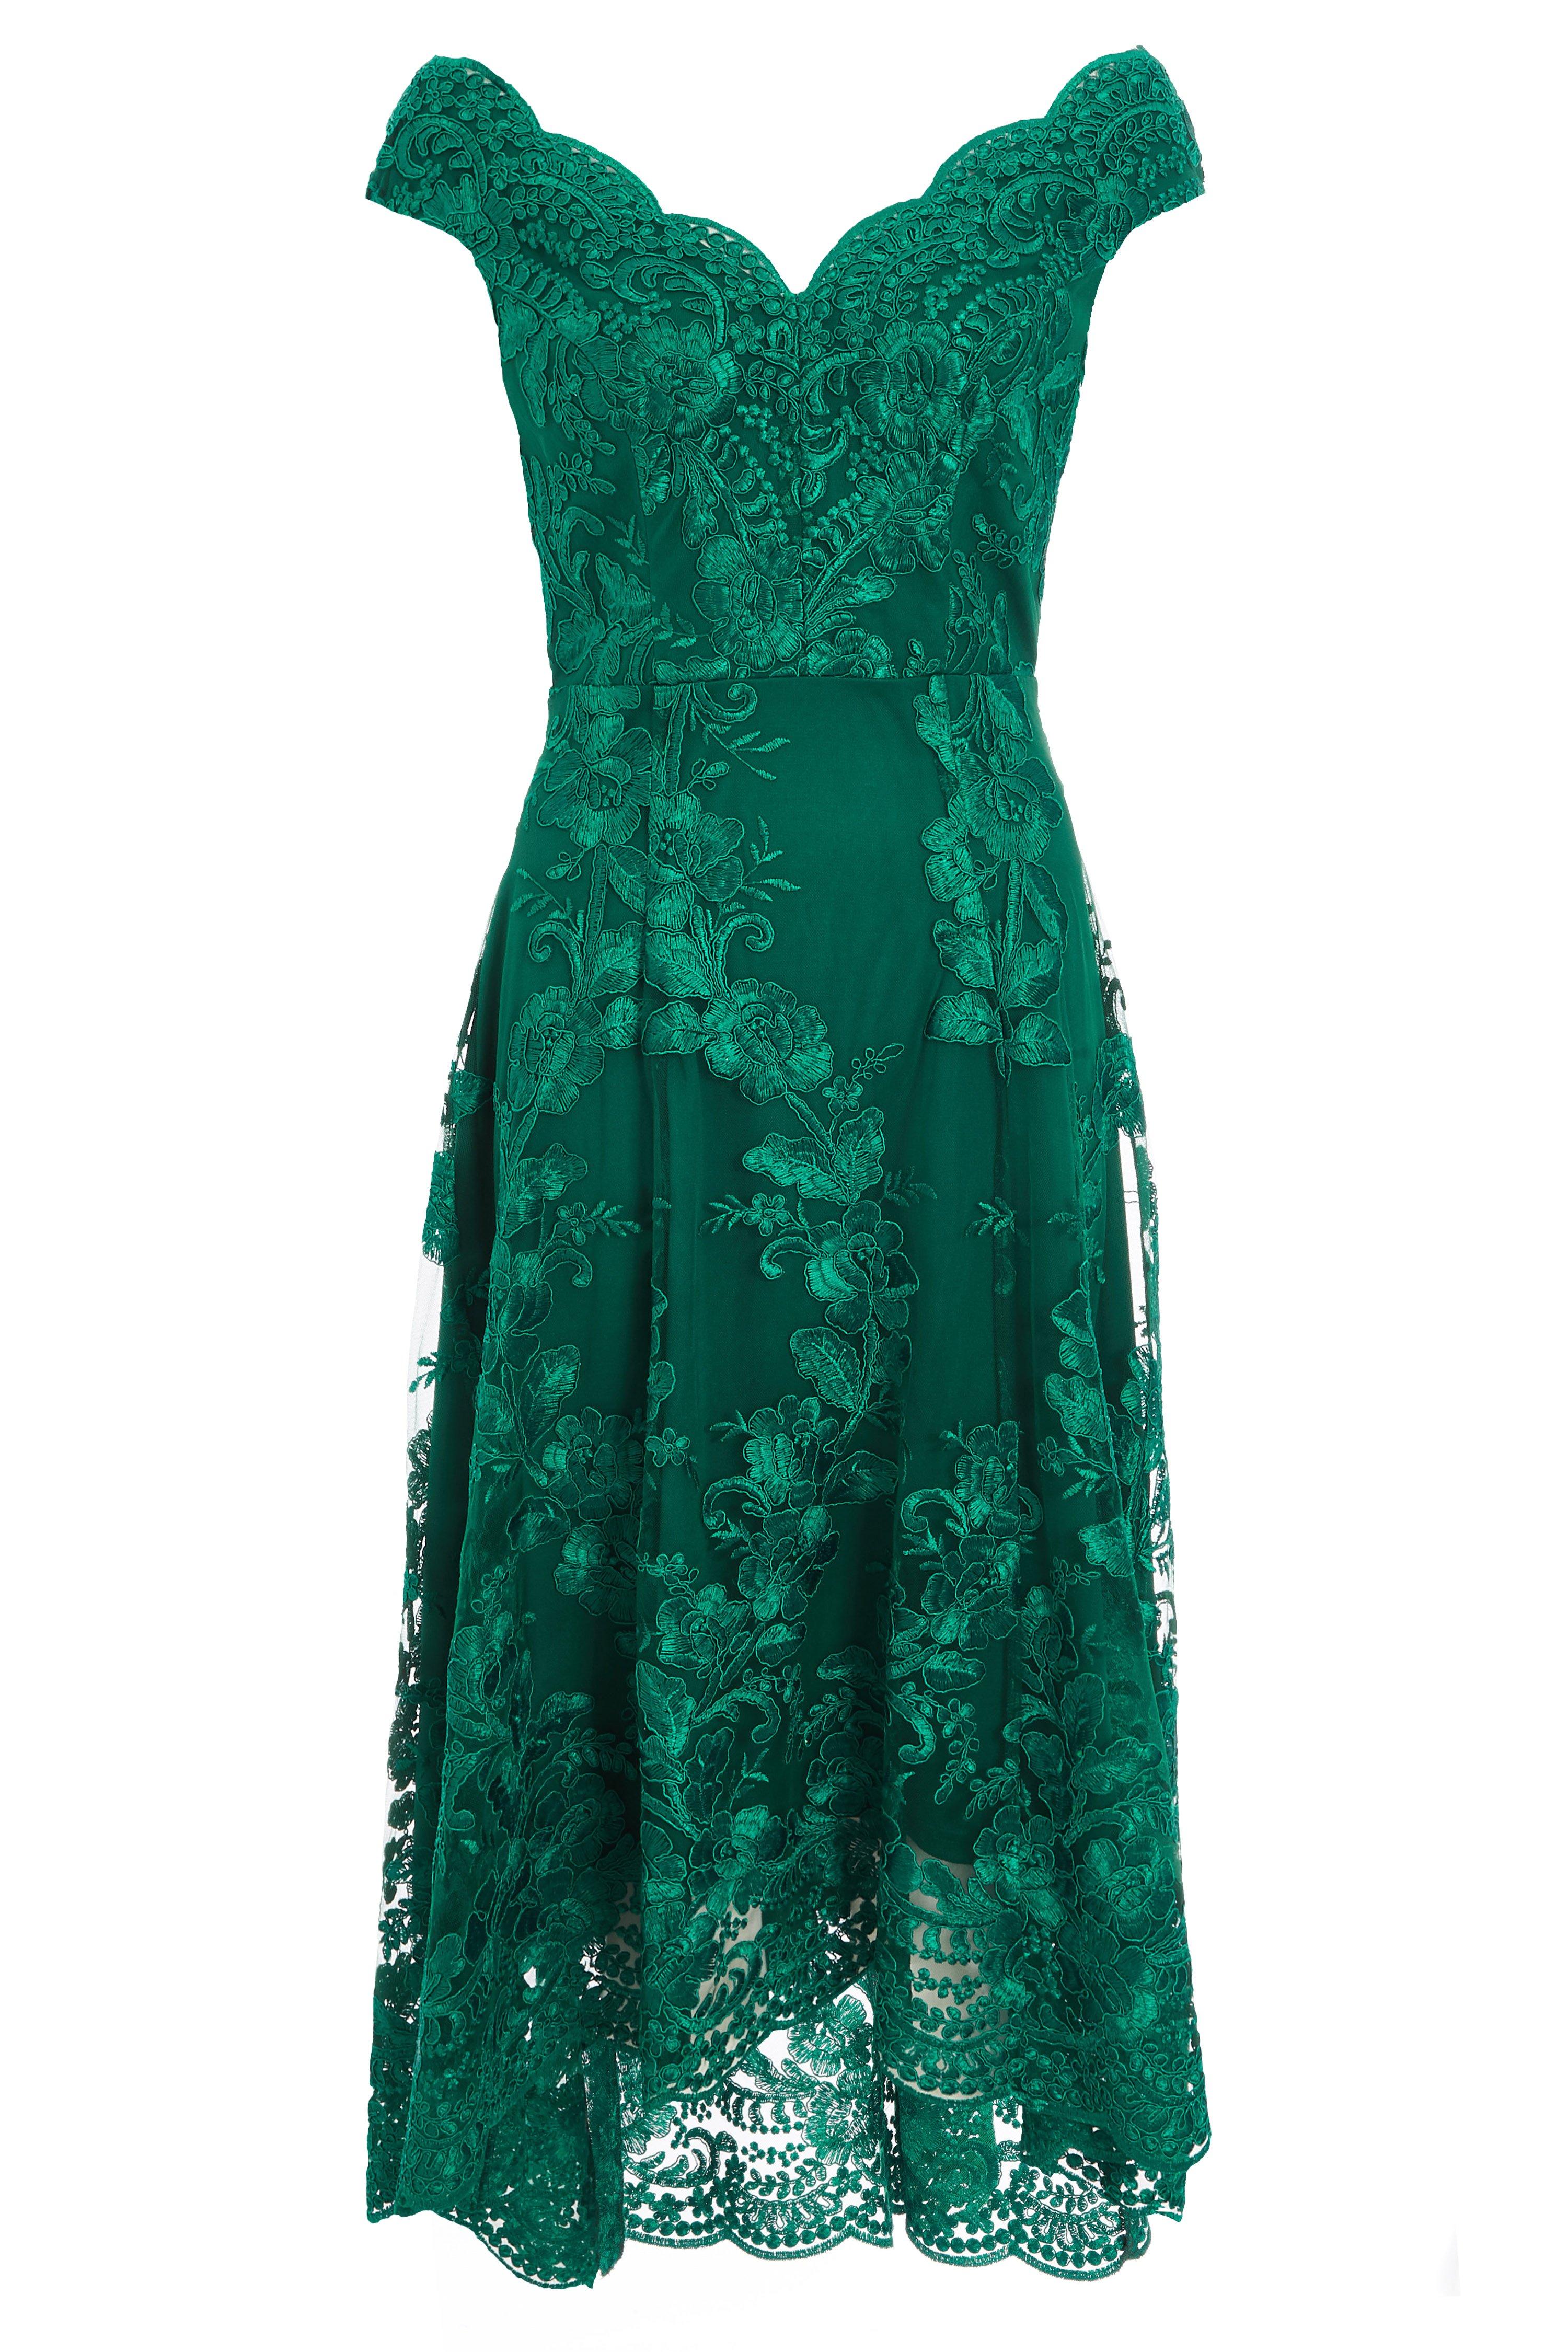 quiz bottle green bardot dress